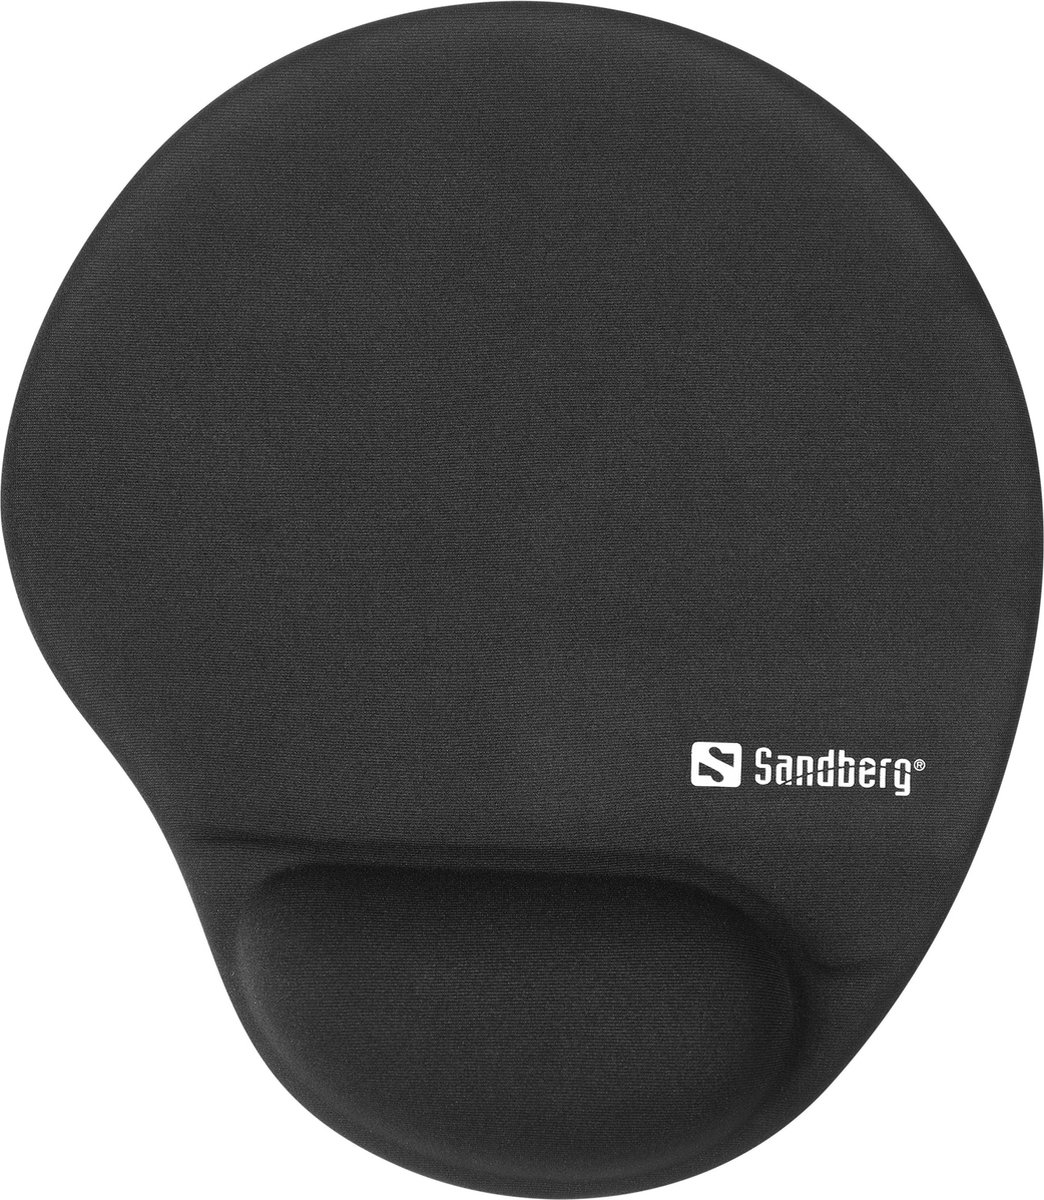 Memory Foam Mousepad Round - Black - Monochromatic - Memory foam - Wrist rest - Non-slip base